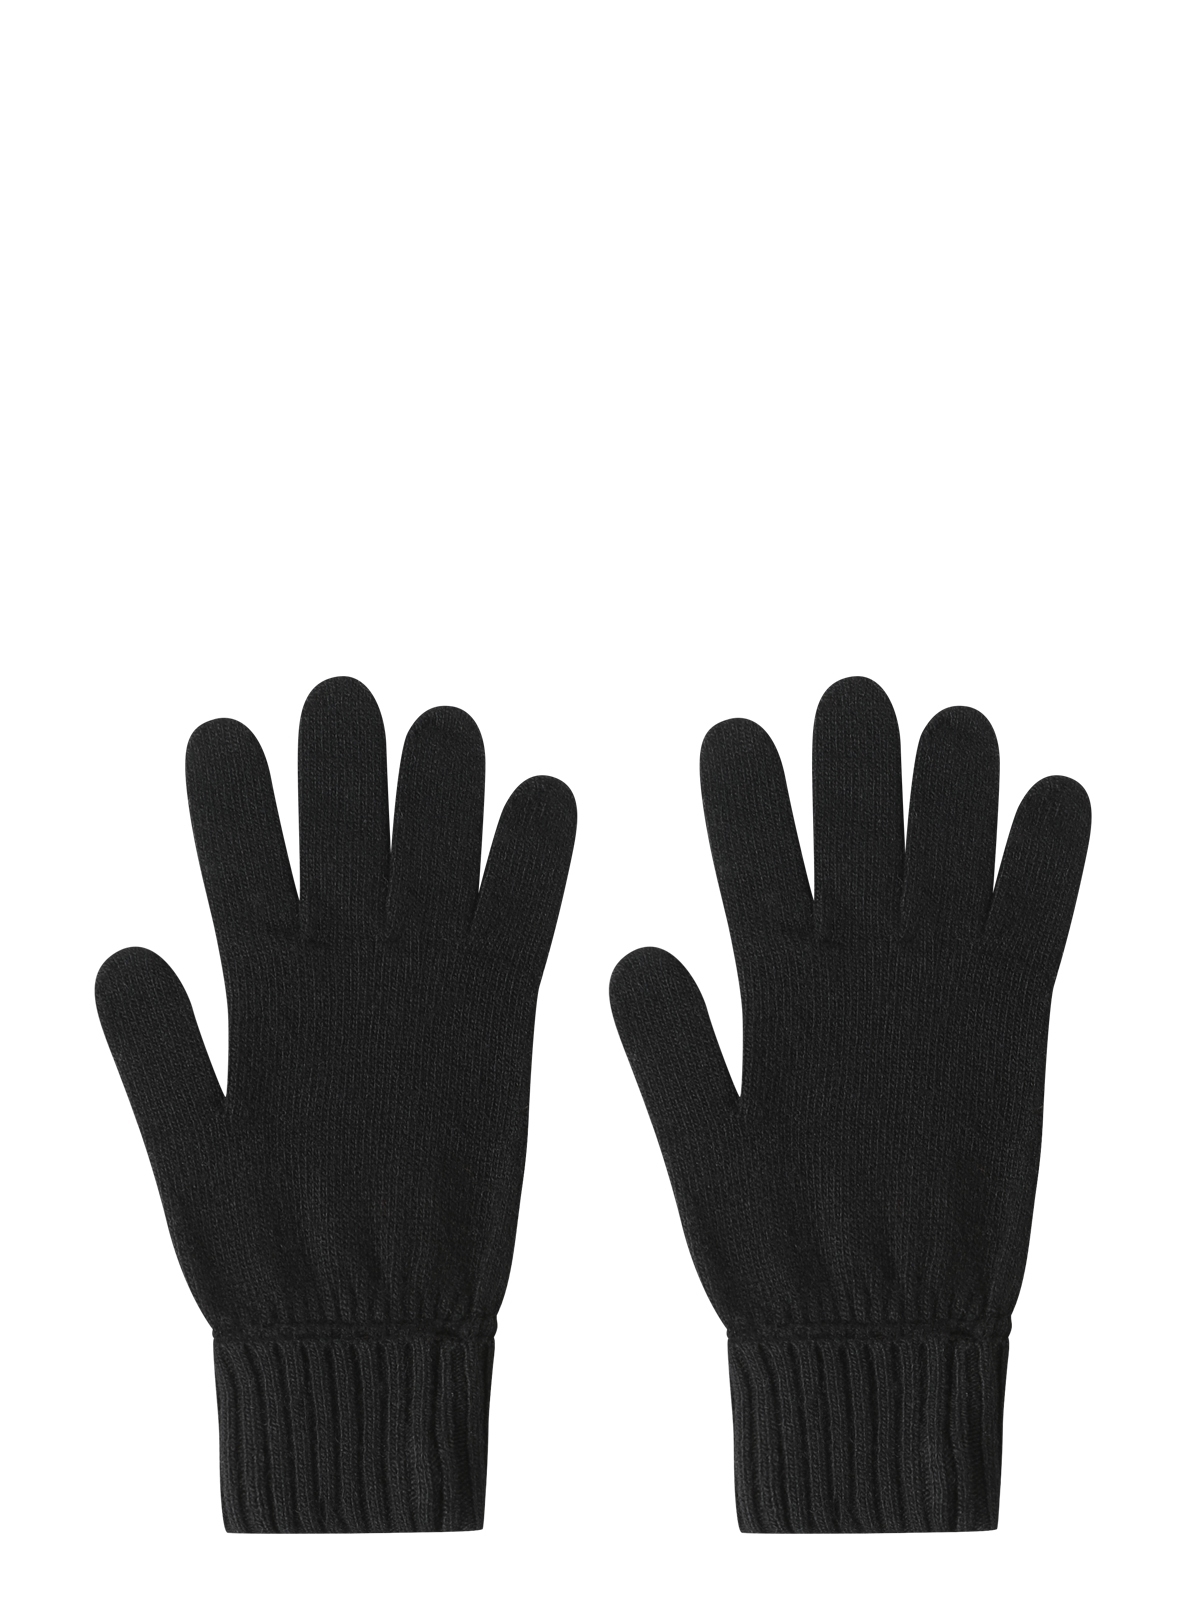  Modern Fit  Kadın Siyah Eldiven